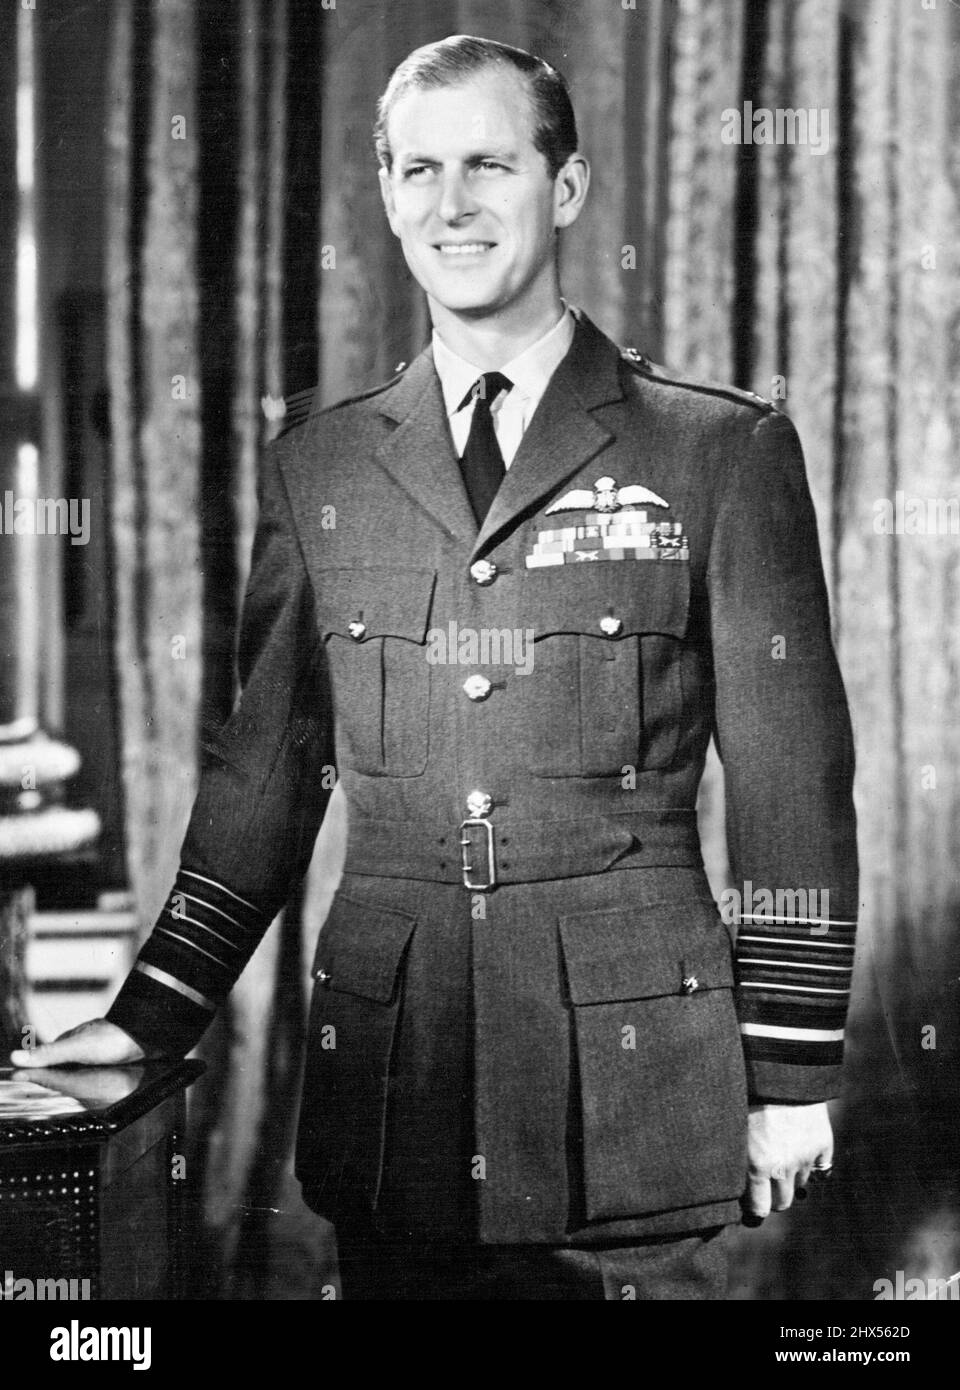 Duke of Edinburgh - Portraits - Air Force Uniforms. March 20, 1955. (Photo by Paul Popper Ltd.). Stock Photo